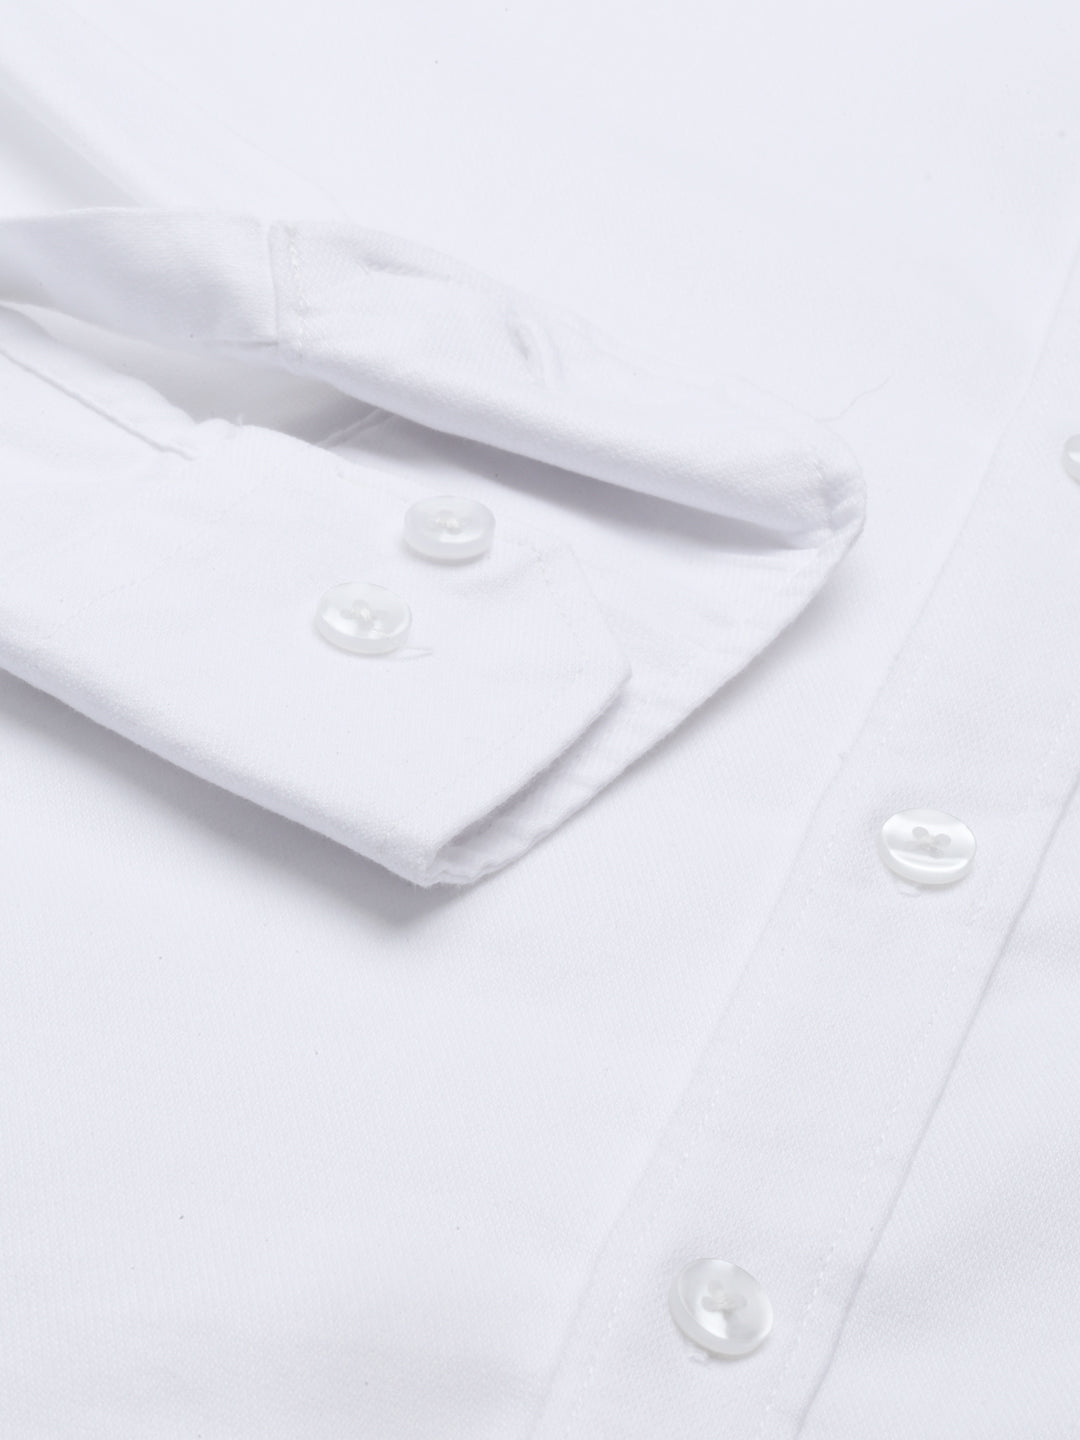 White Solid Casual Shirt Solid Shirt Bushirt   